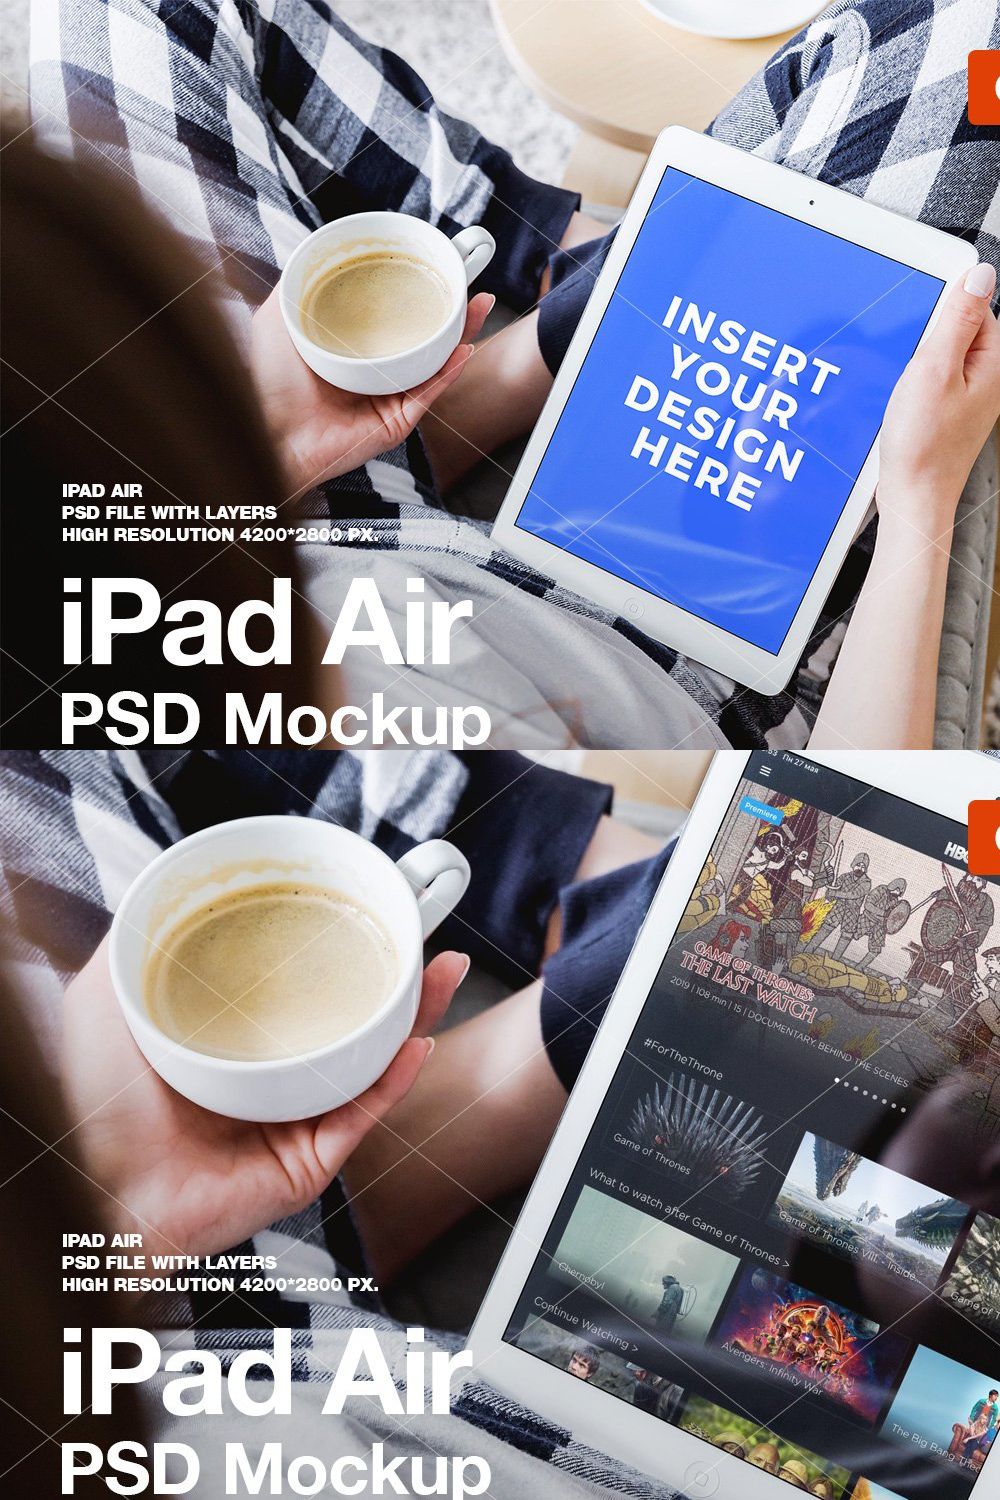 iPad Air PSD Mockup pinterest preview image.